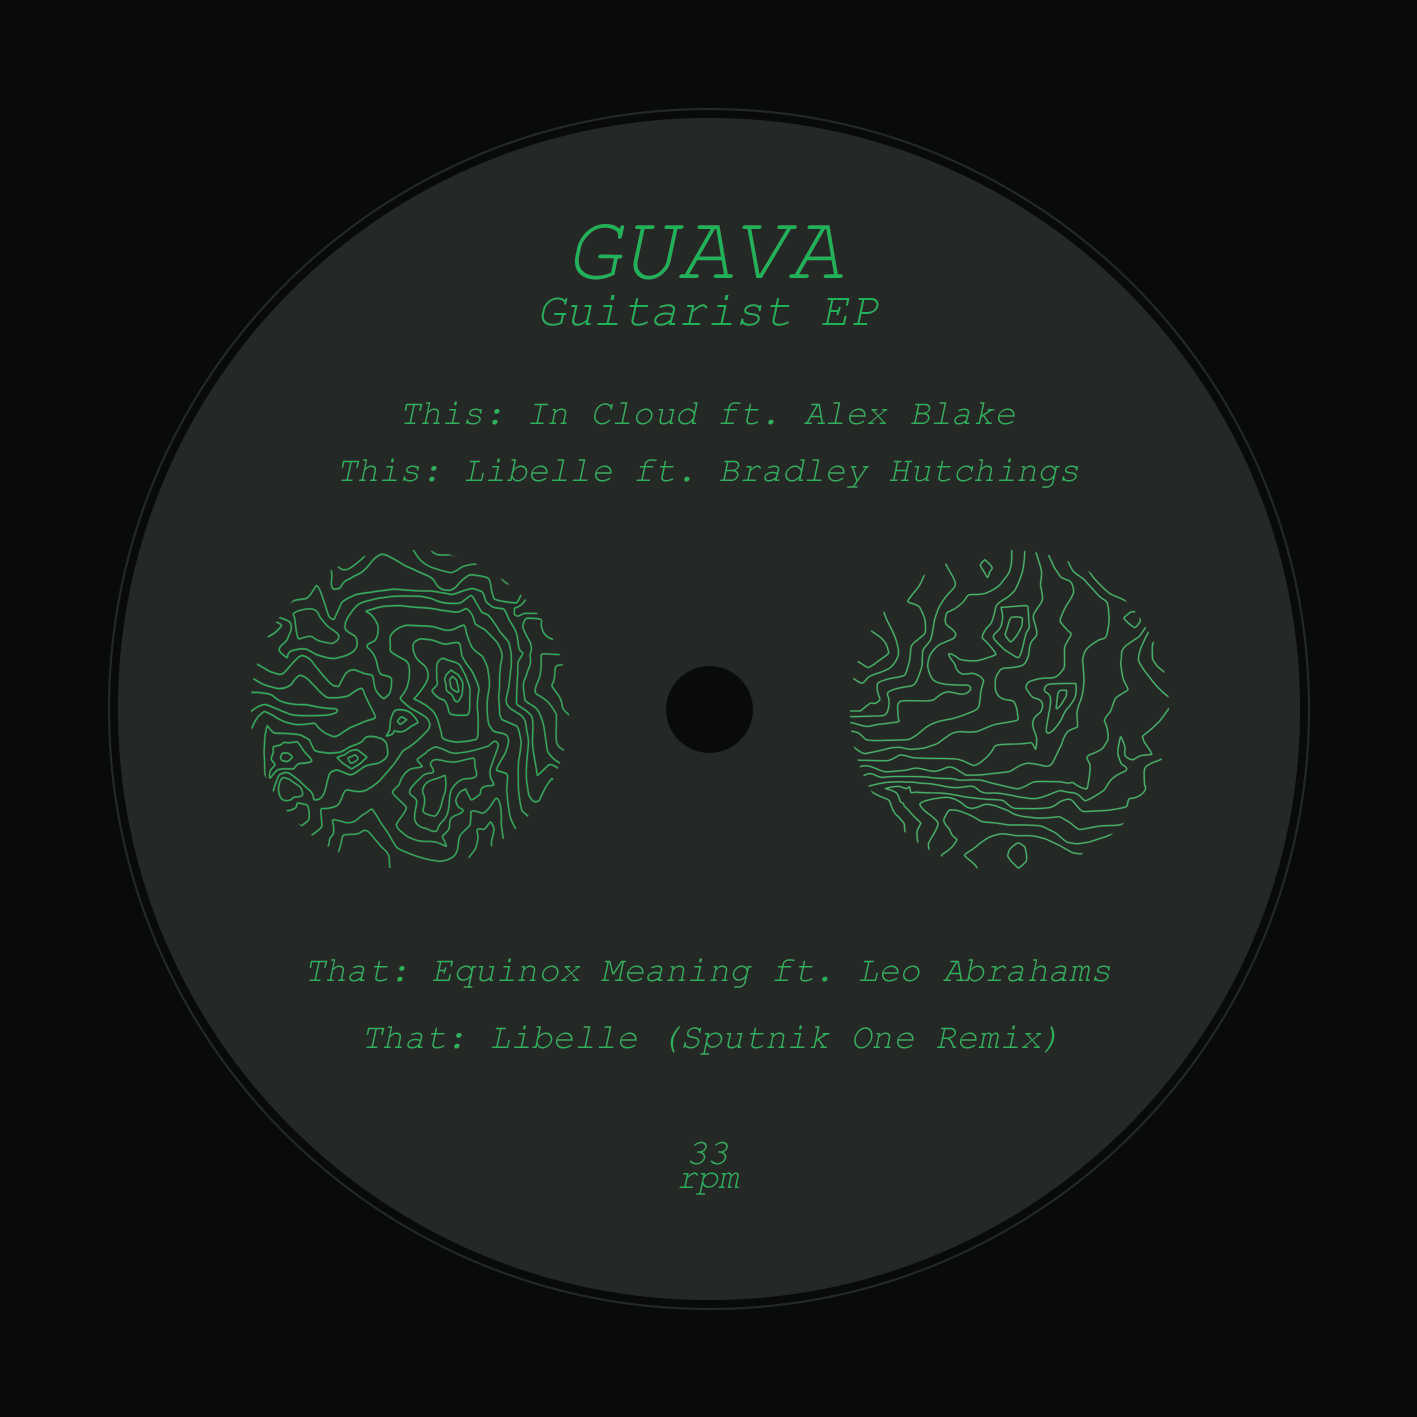 GUAVA 'GUITARIST EP' 12"